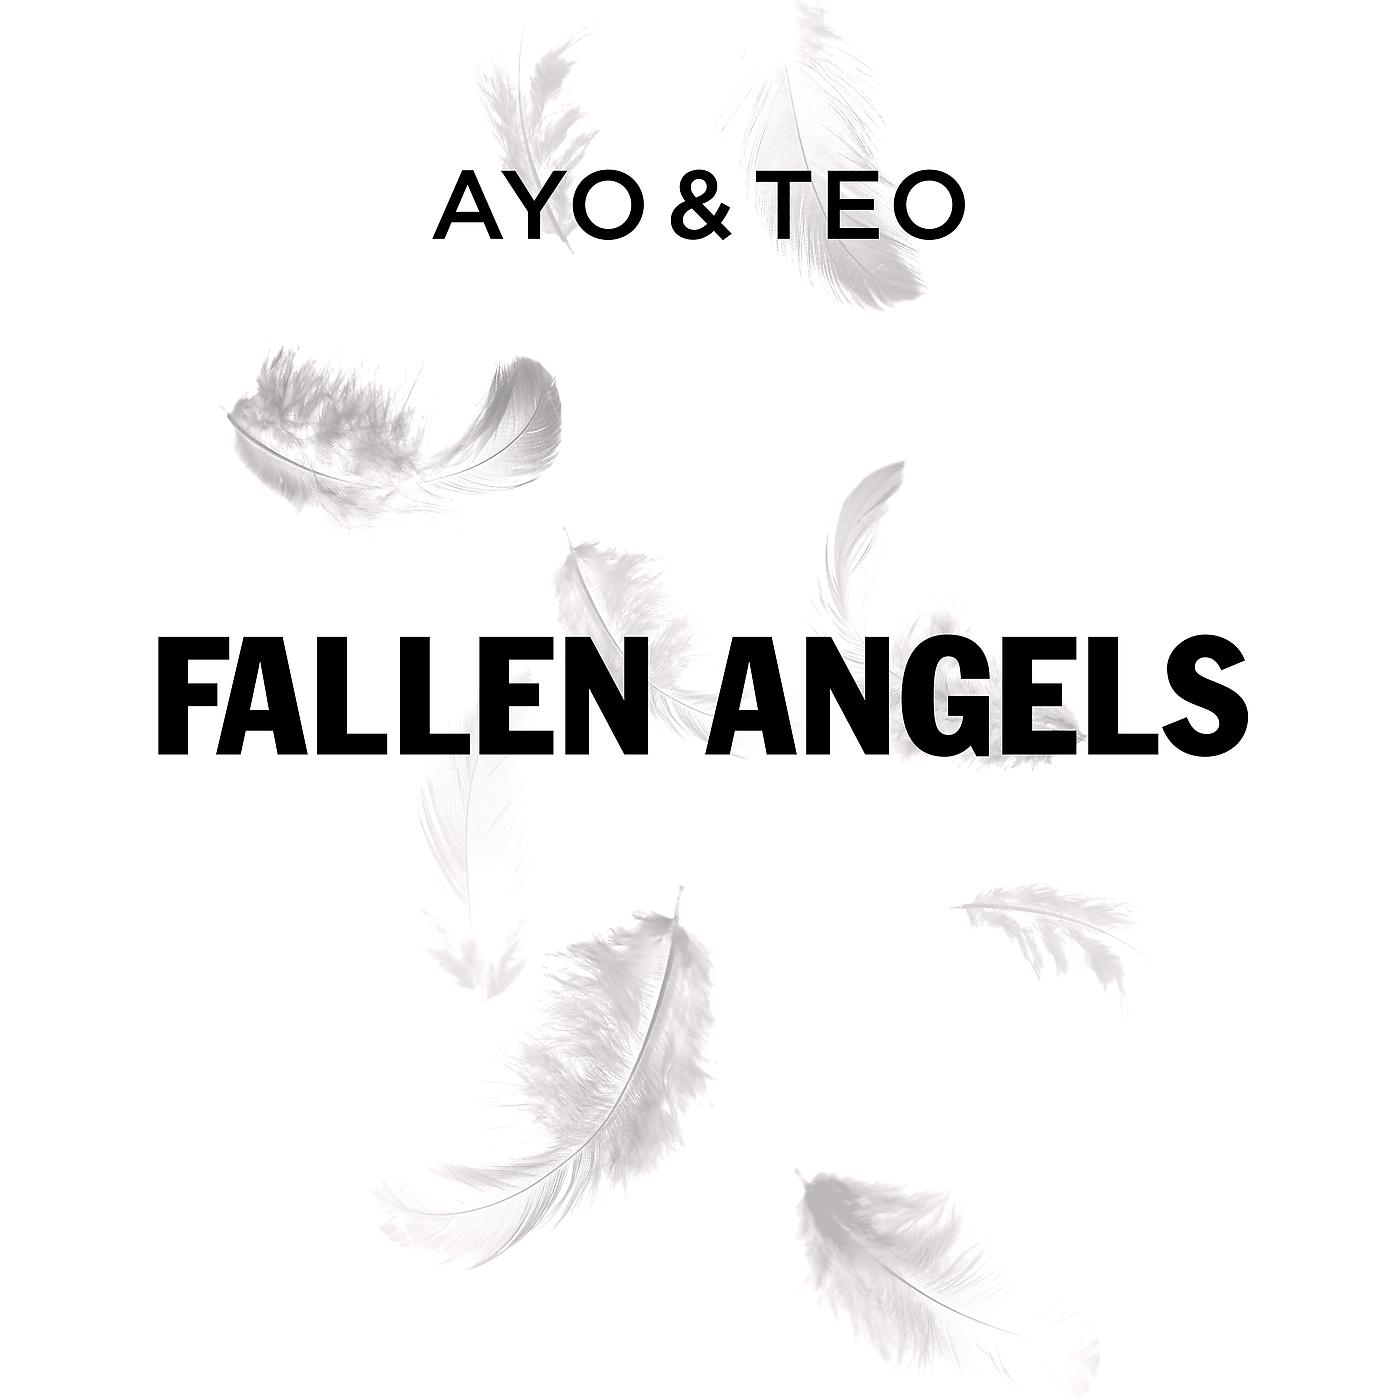 Falling angels песня. Fallen Angel текст. Падший ангел текст. Fallen Angel песня. Падшие ангелы от Kraenkova текст.